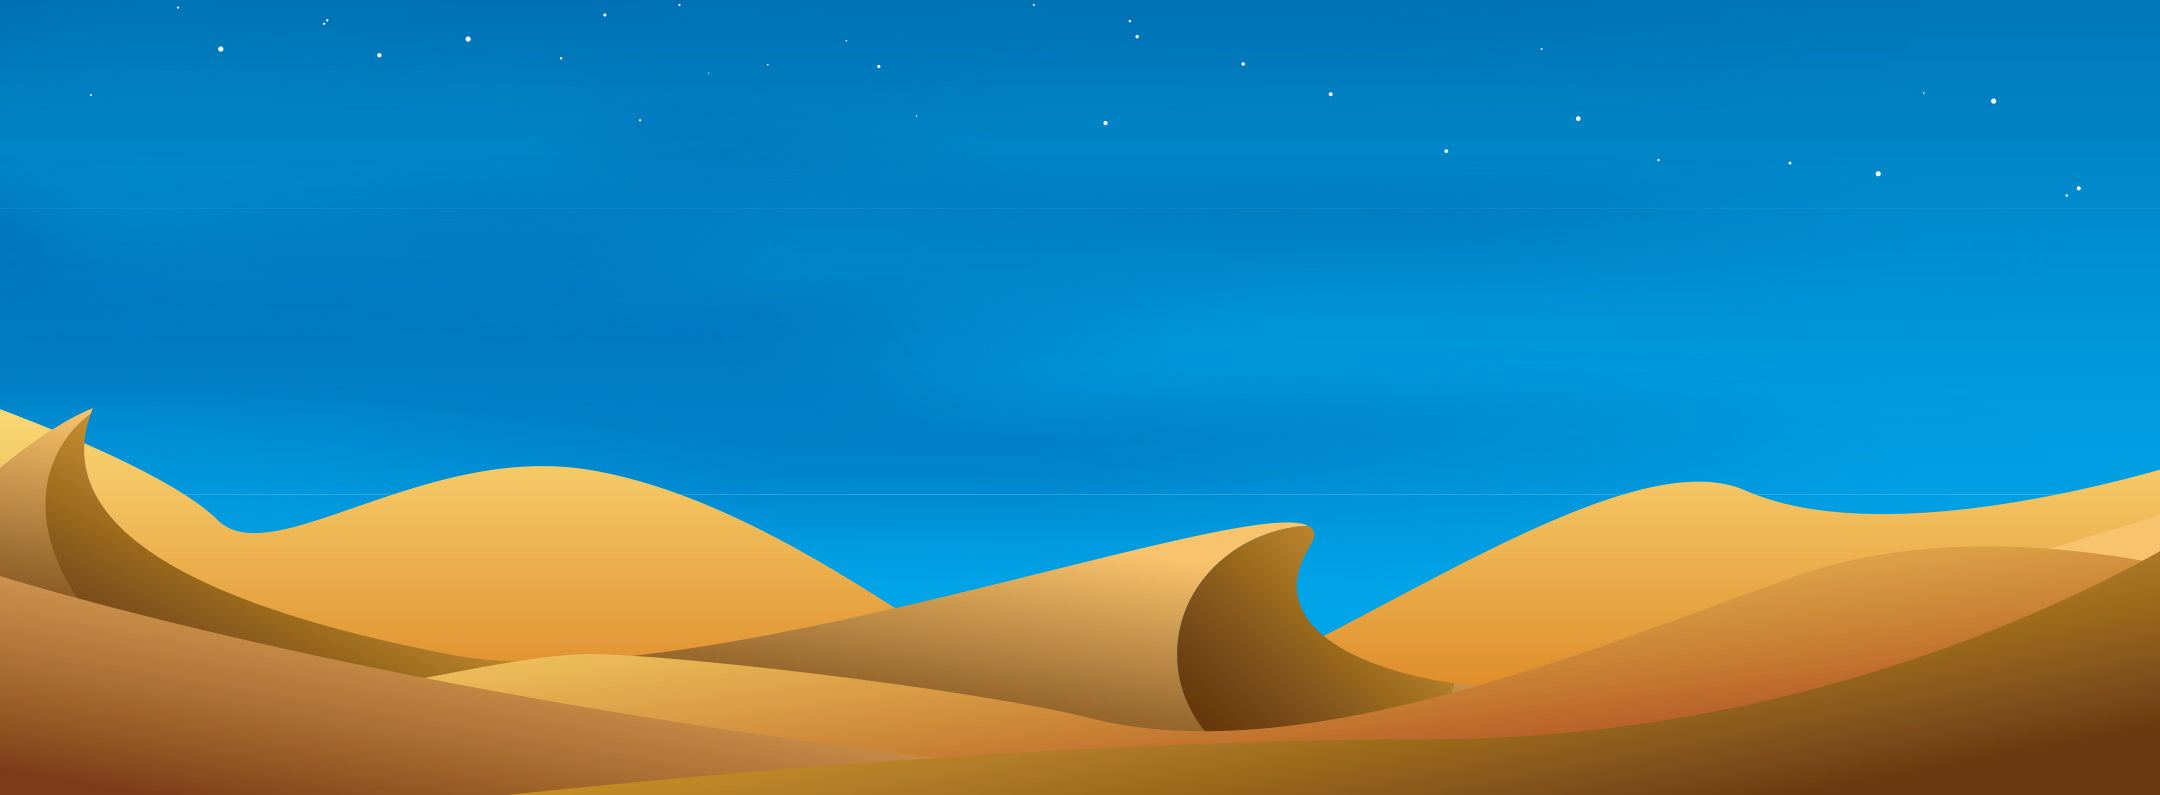 Sand Dunes Wallpaper Images - Free Download on Freepik